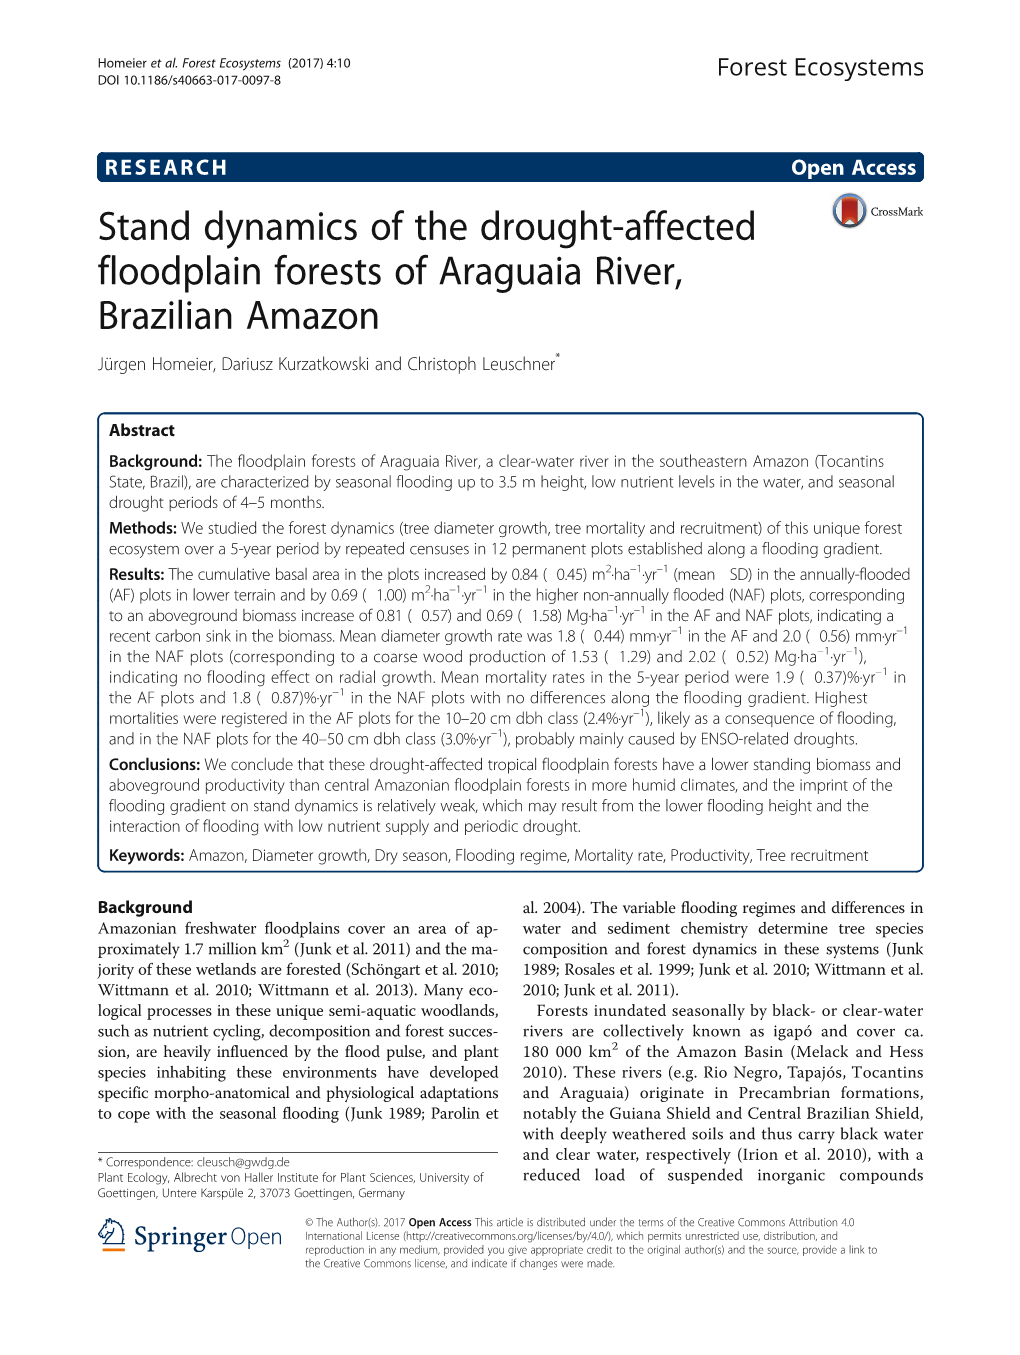 Stand Dynamics of the Drought-Affected Floodplain Forests of Araguaia River, Brazilian Amazon Jürgen Homeier, Dariusz Kurzatkowski and Christoph Leuschner*